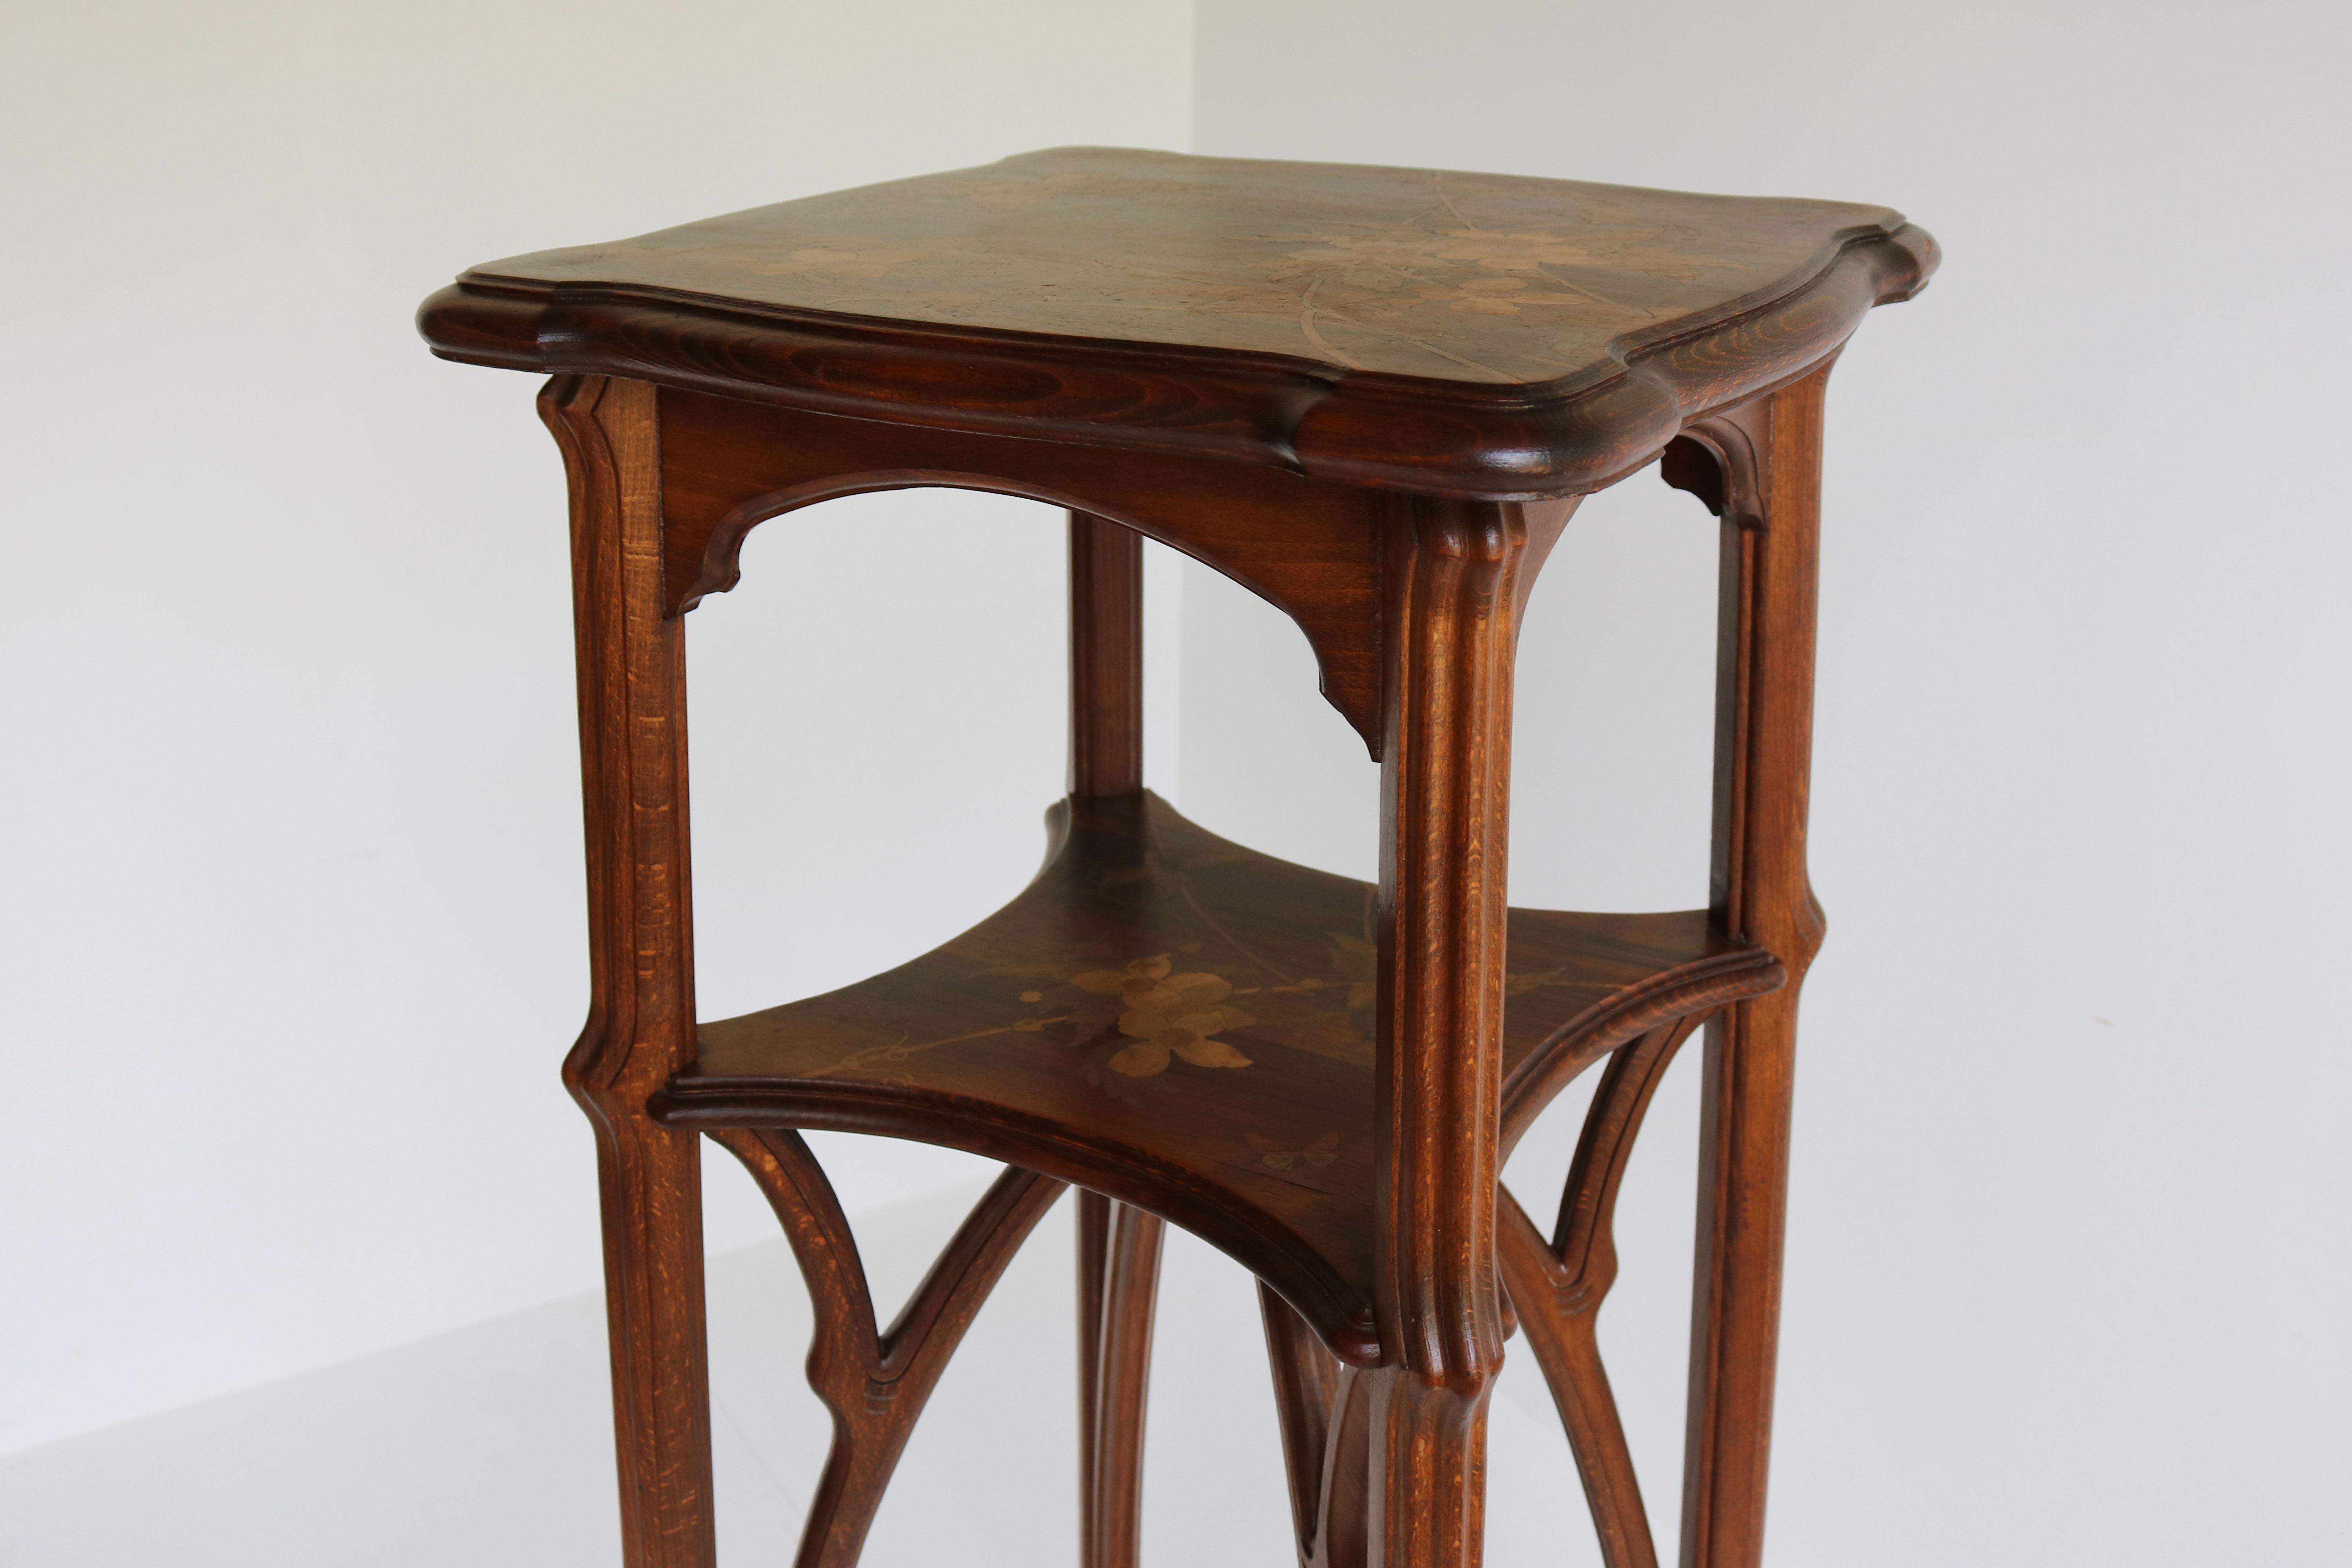 Original Art Nouveau Pedestal by Emile Galle 1890 French Antique Inlaid Table For Sale 7